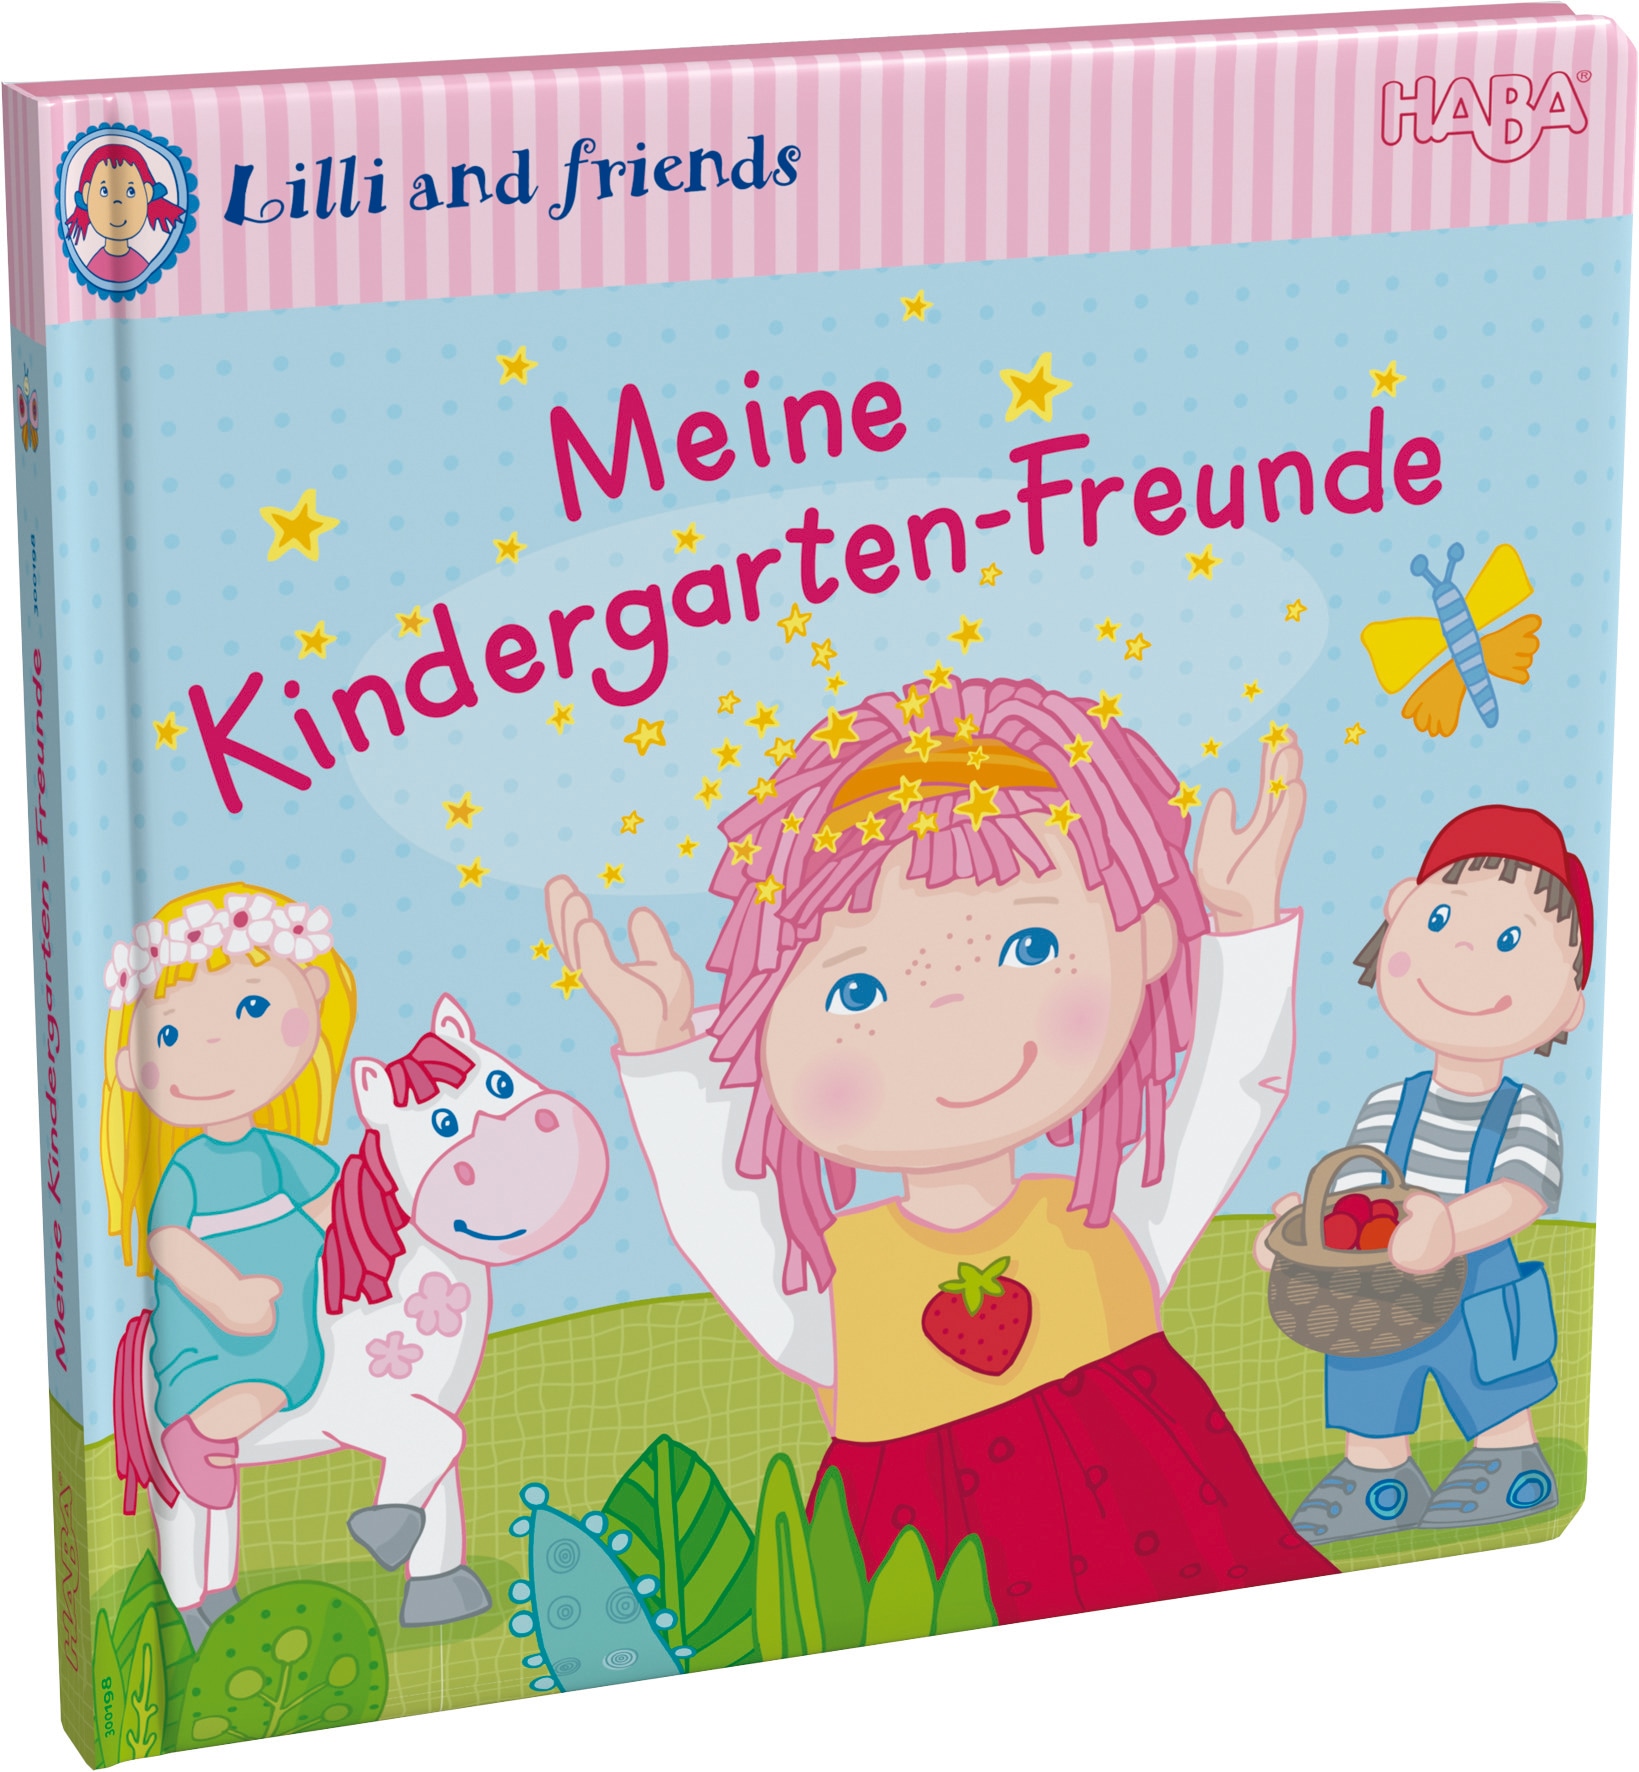 Buch »Lilli and friends Freundebuch Meine Kindergarten-Freunde«